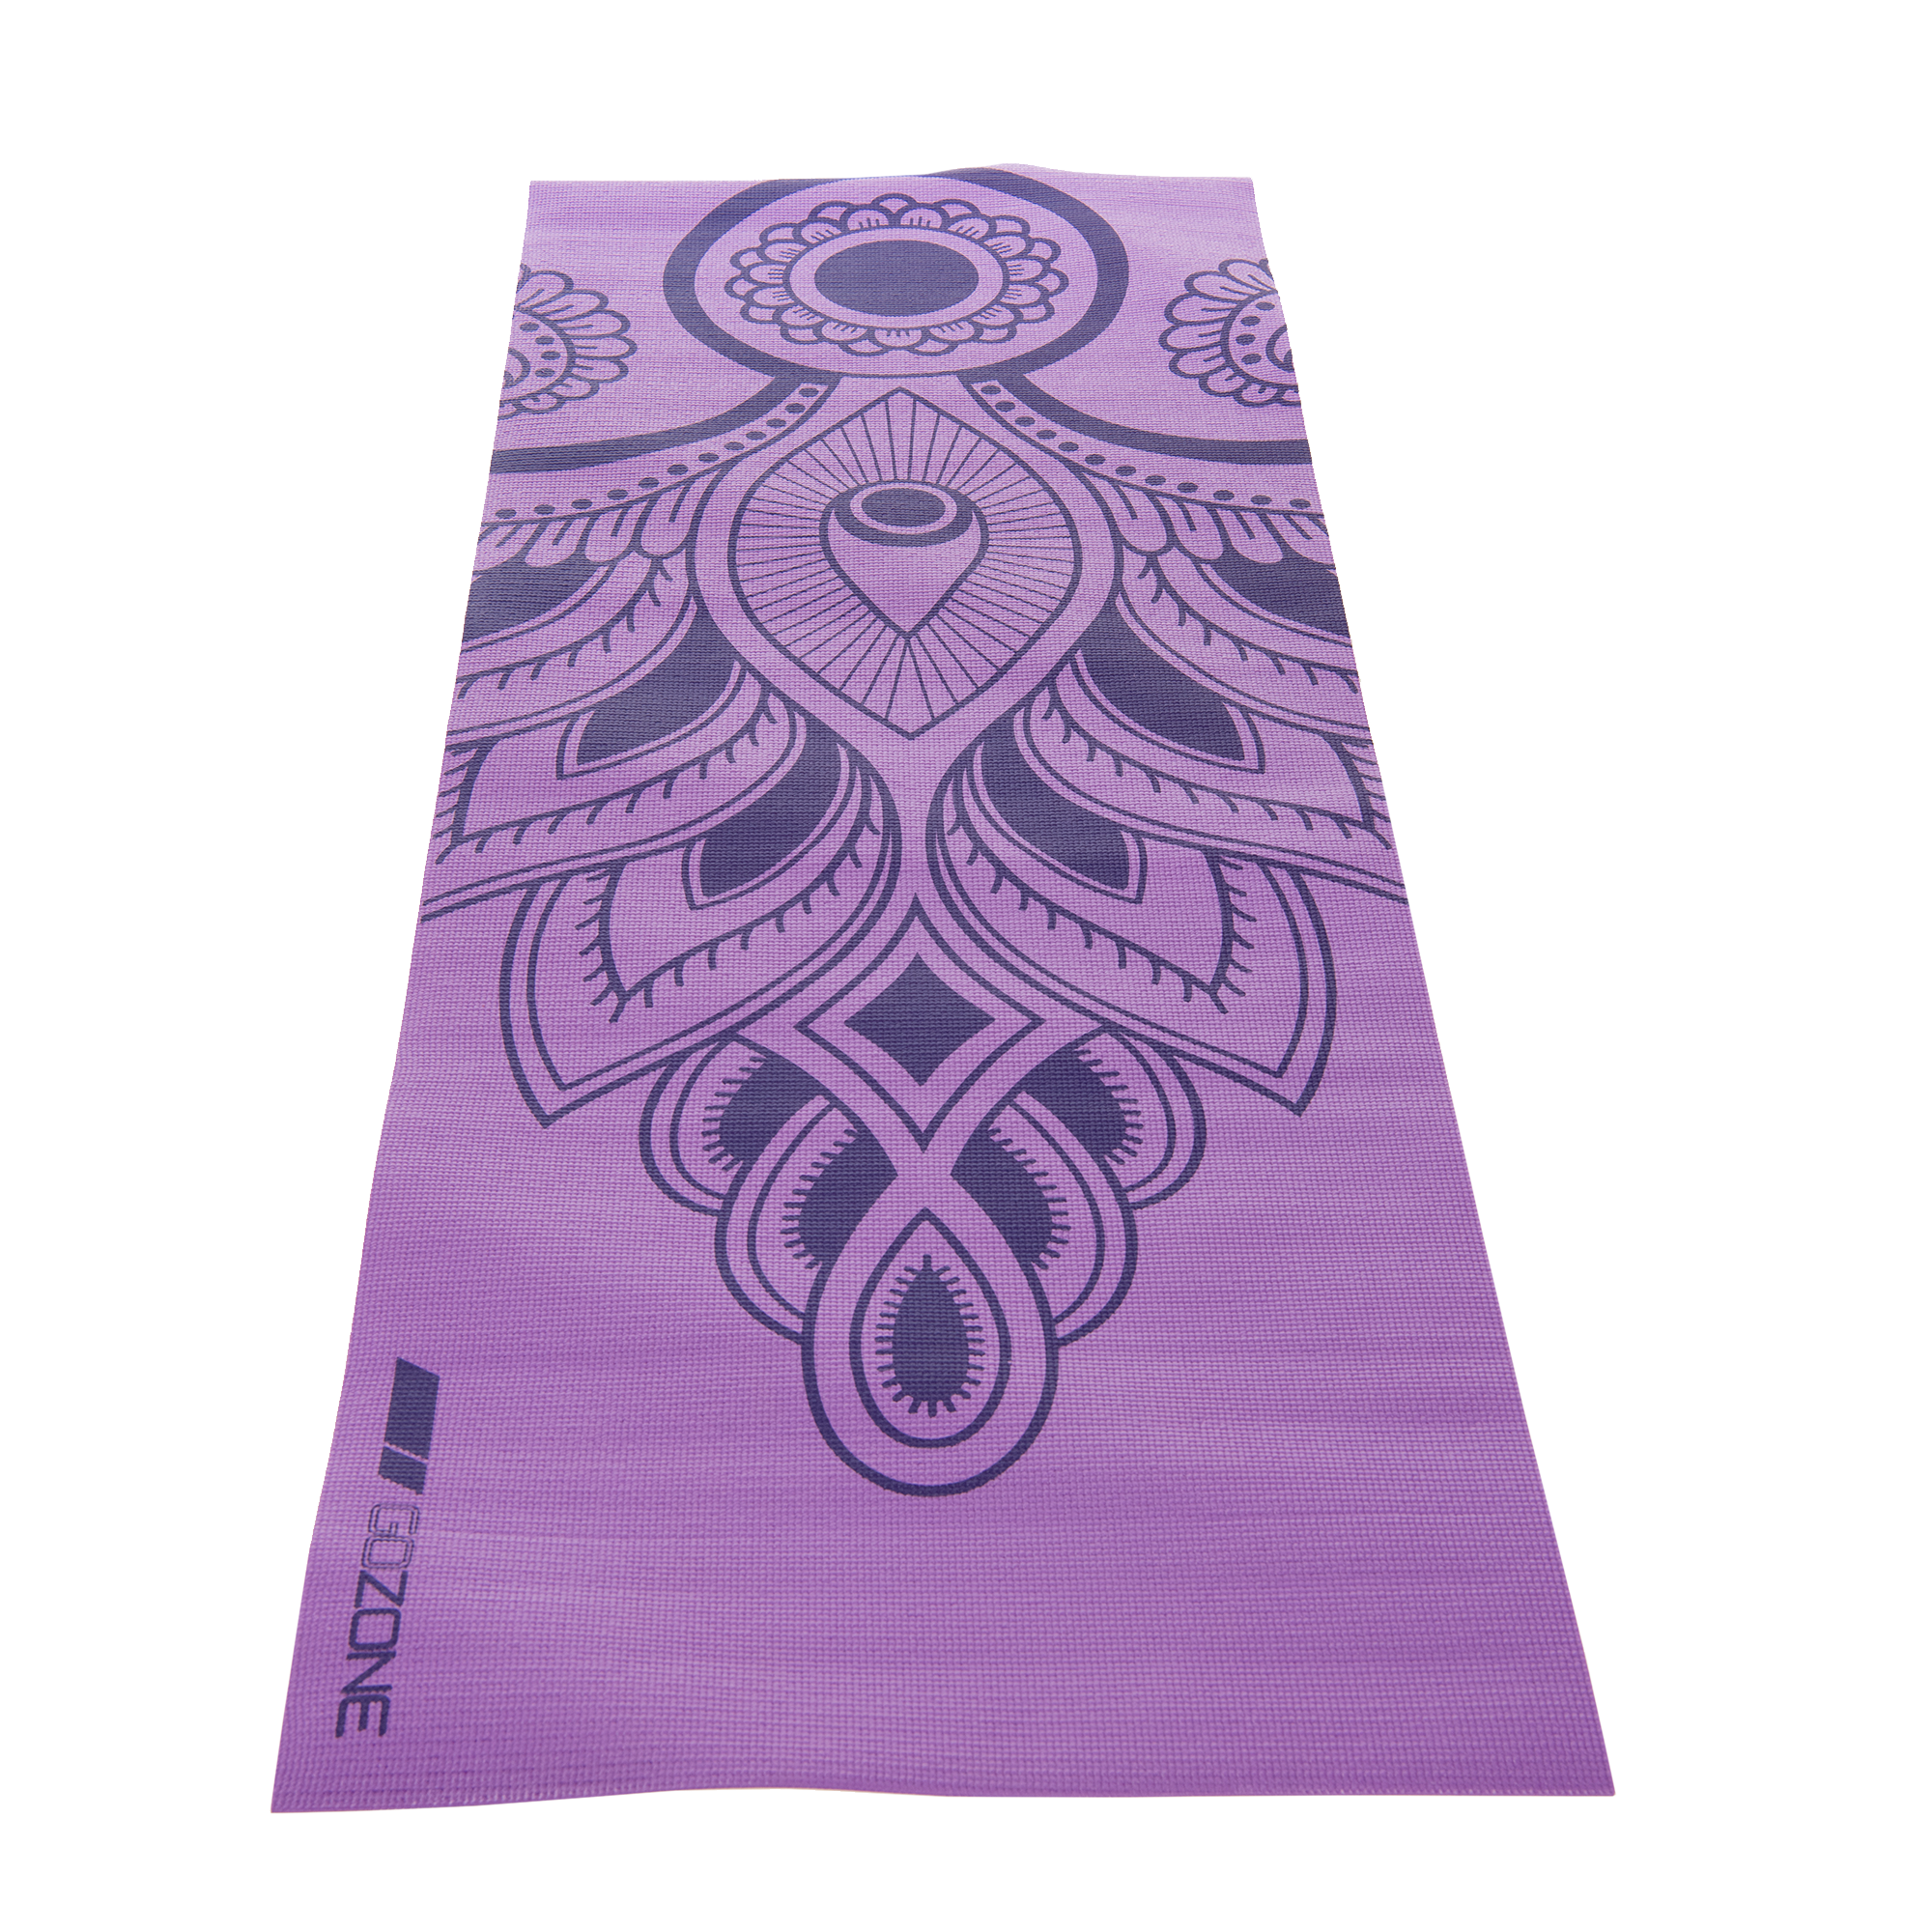 Printed Yoga Mats